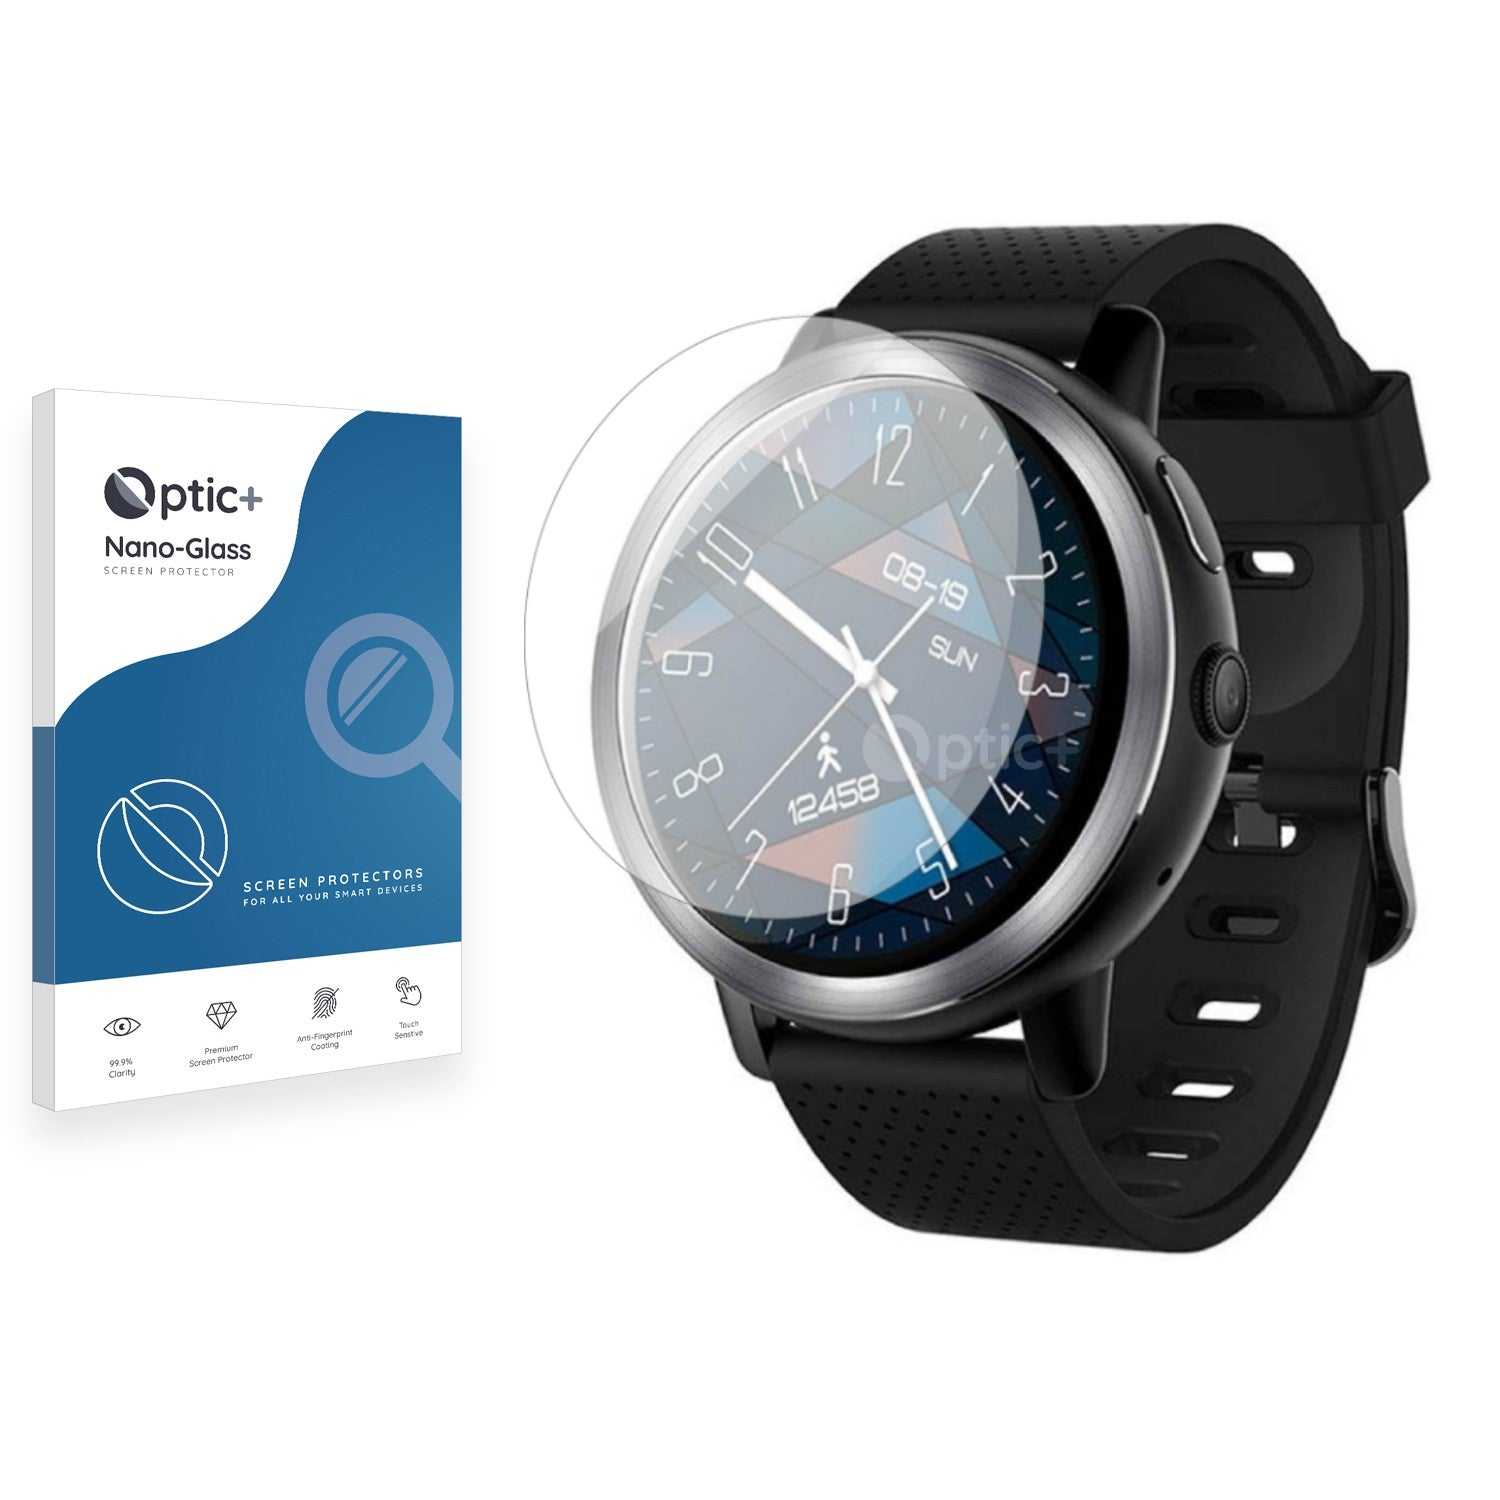 ScreenShield, Optic+ Nano Glass Screen Protector for Lemfo Smartwatch 1.39in